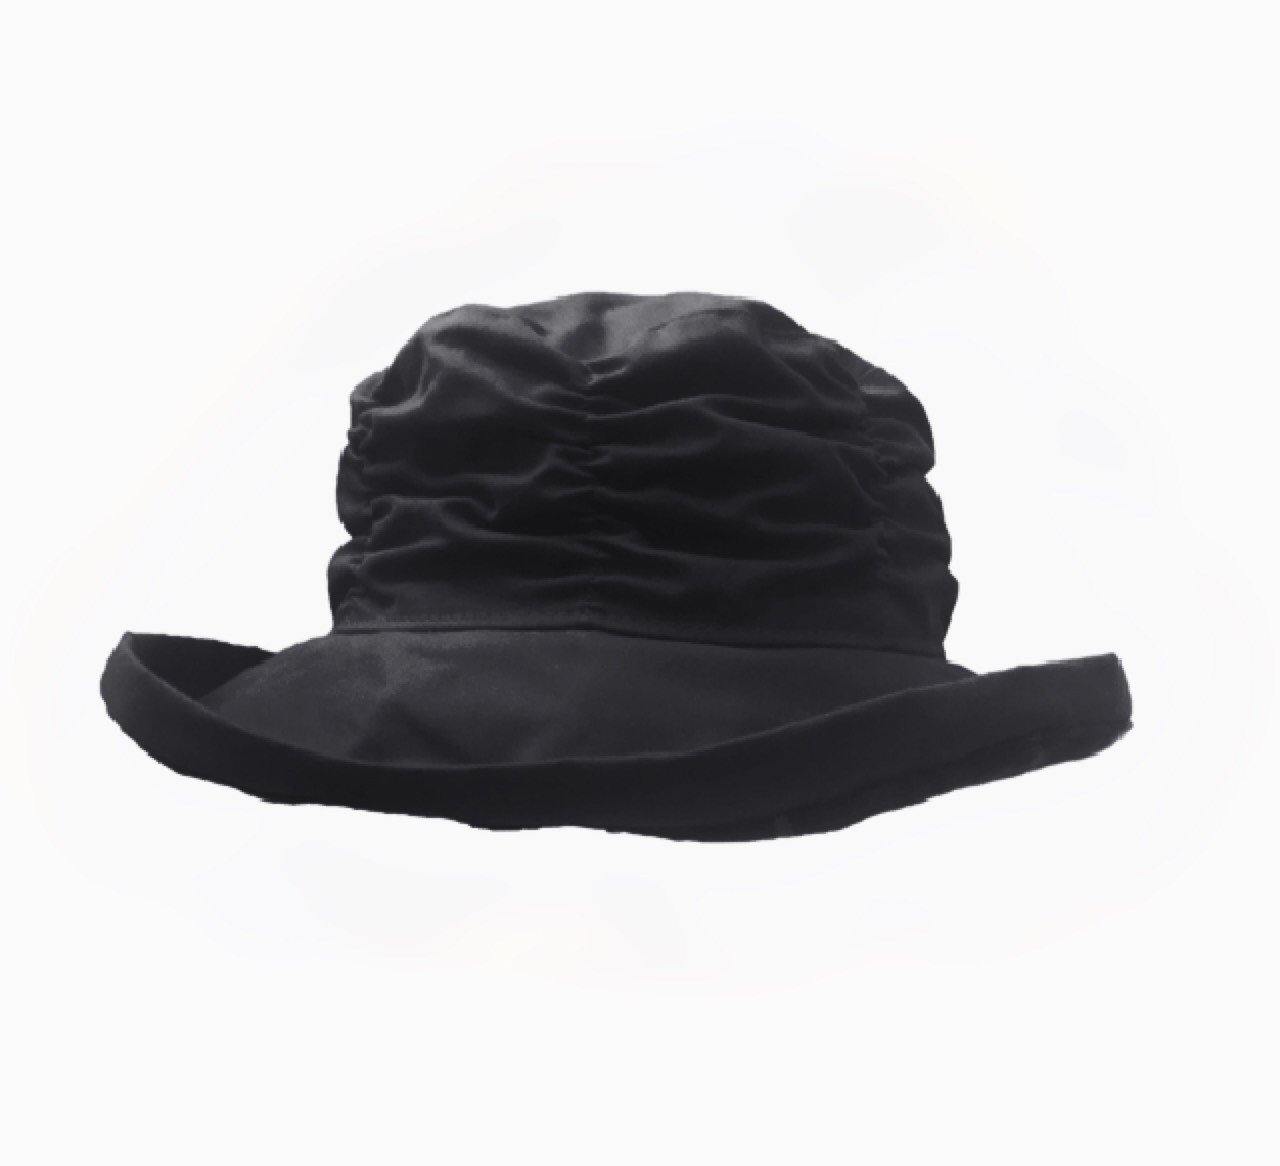 Waterproof Flat Pack Rain Hat, Wax Cotton Women's hat Made in UK - Free Life's Love